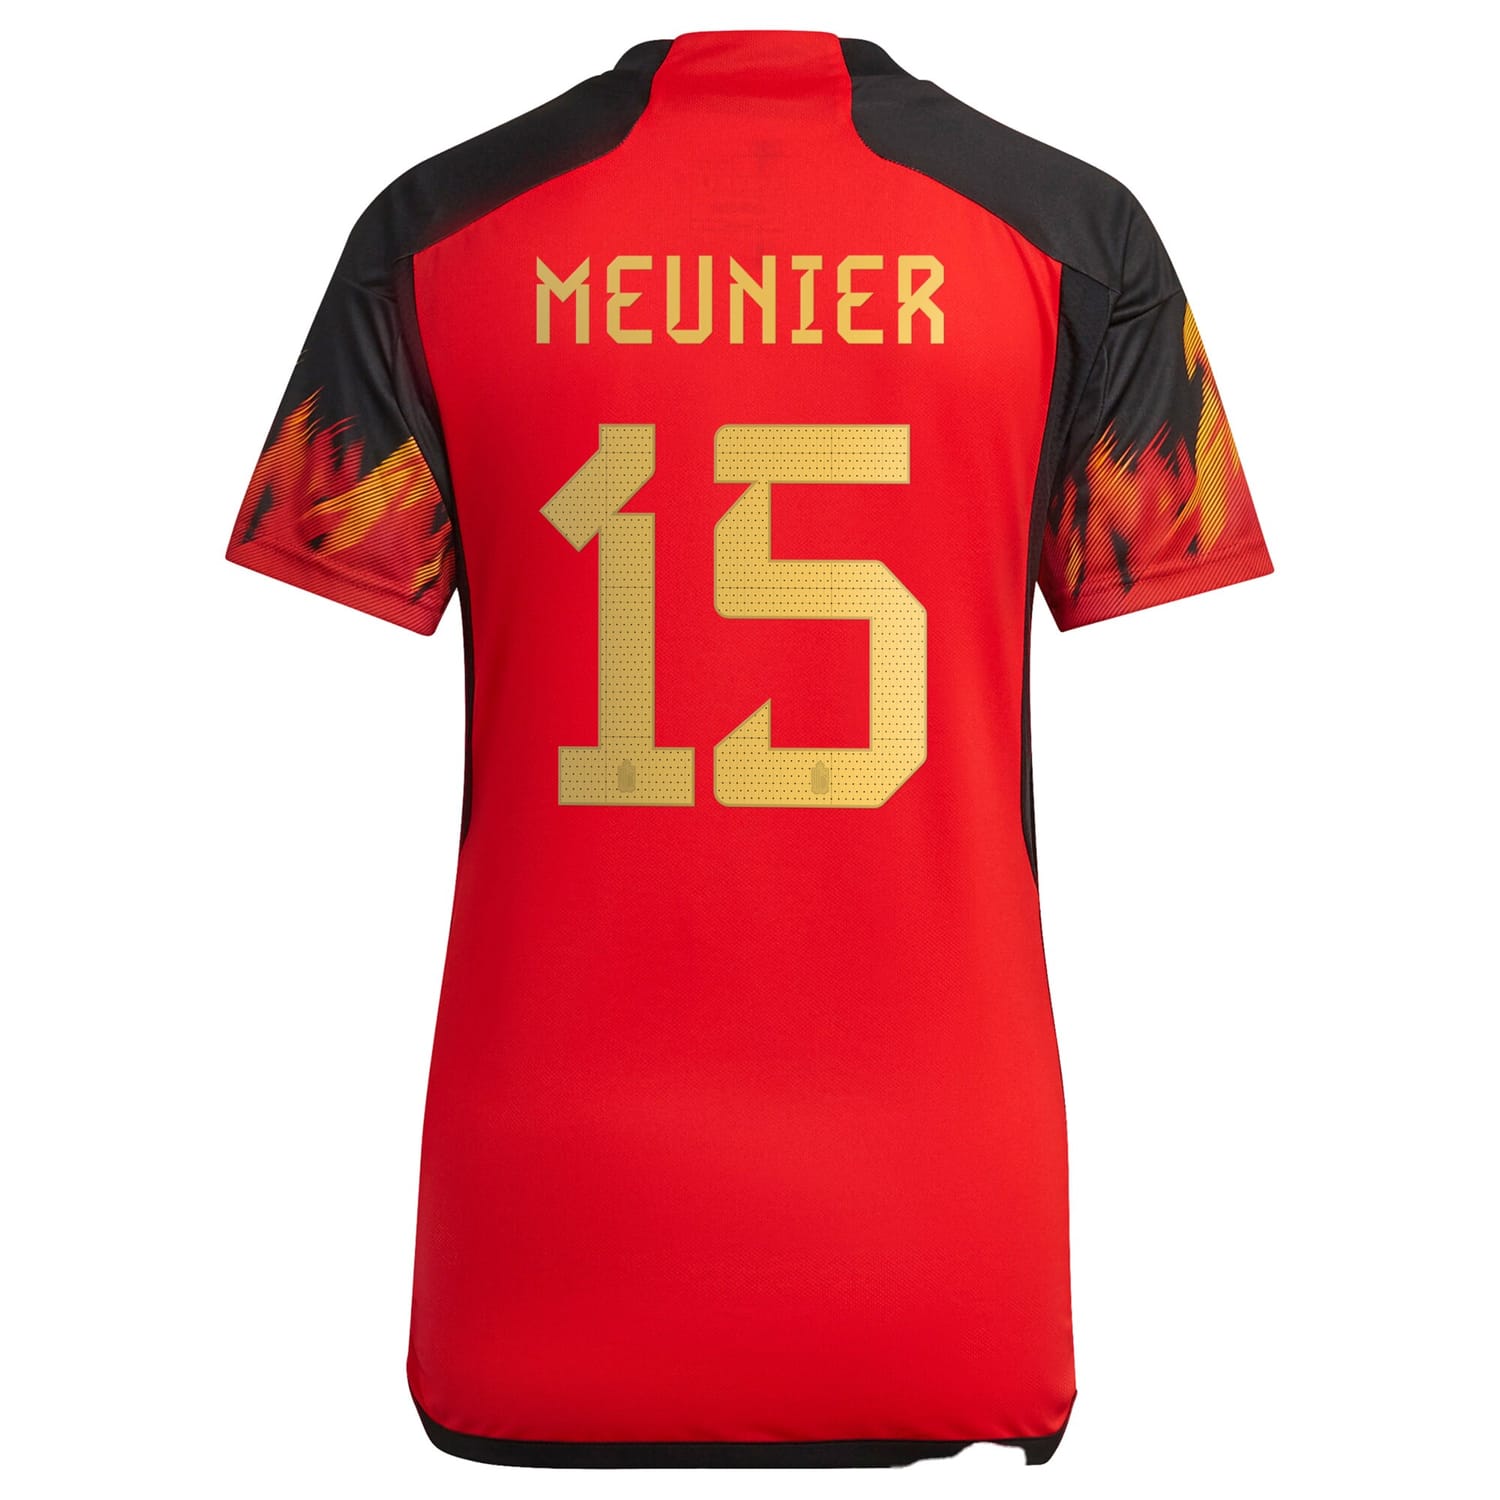 Belgium National Team Home Jersey Shirt 2022 player Thomas Meunier 15 printing for Women